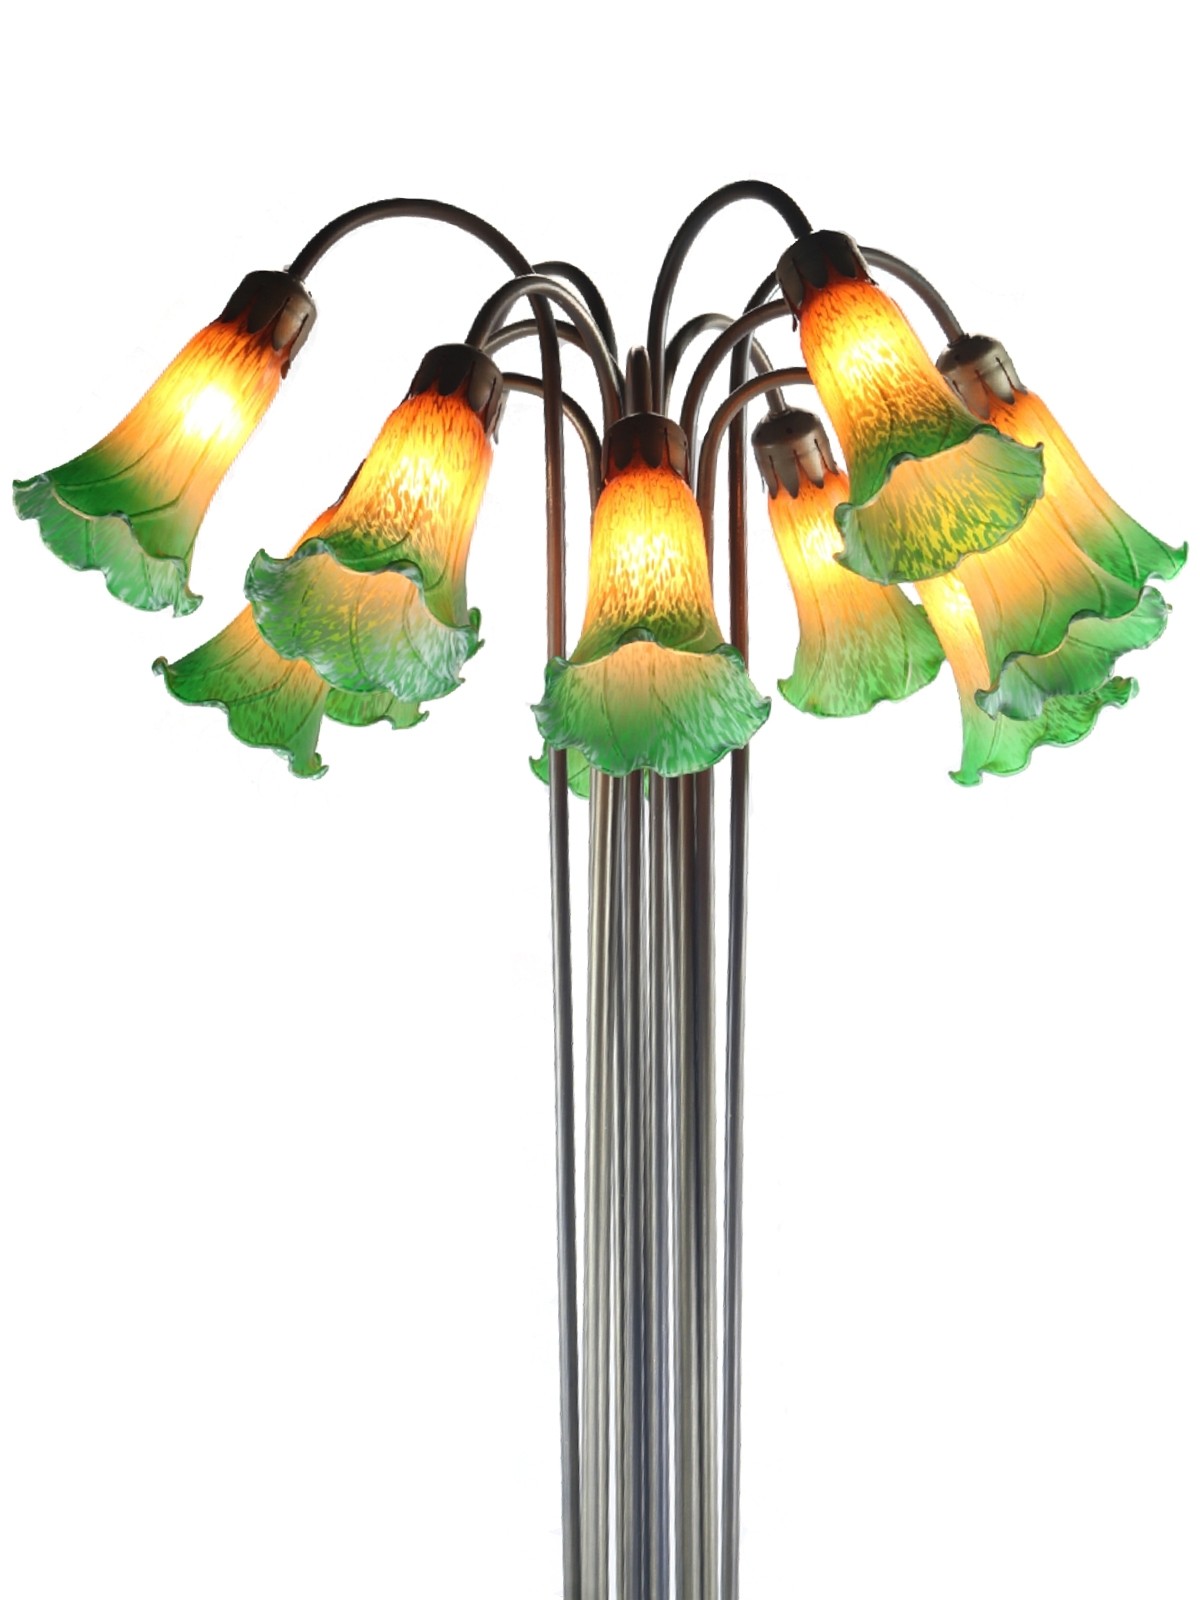 12 Shade Lily Floor Lamp Amber/Green 149cm + Free Bulbs